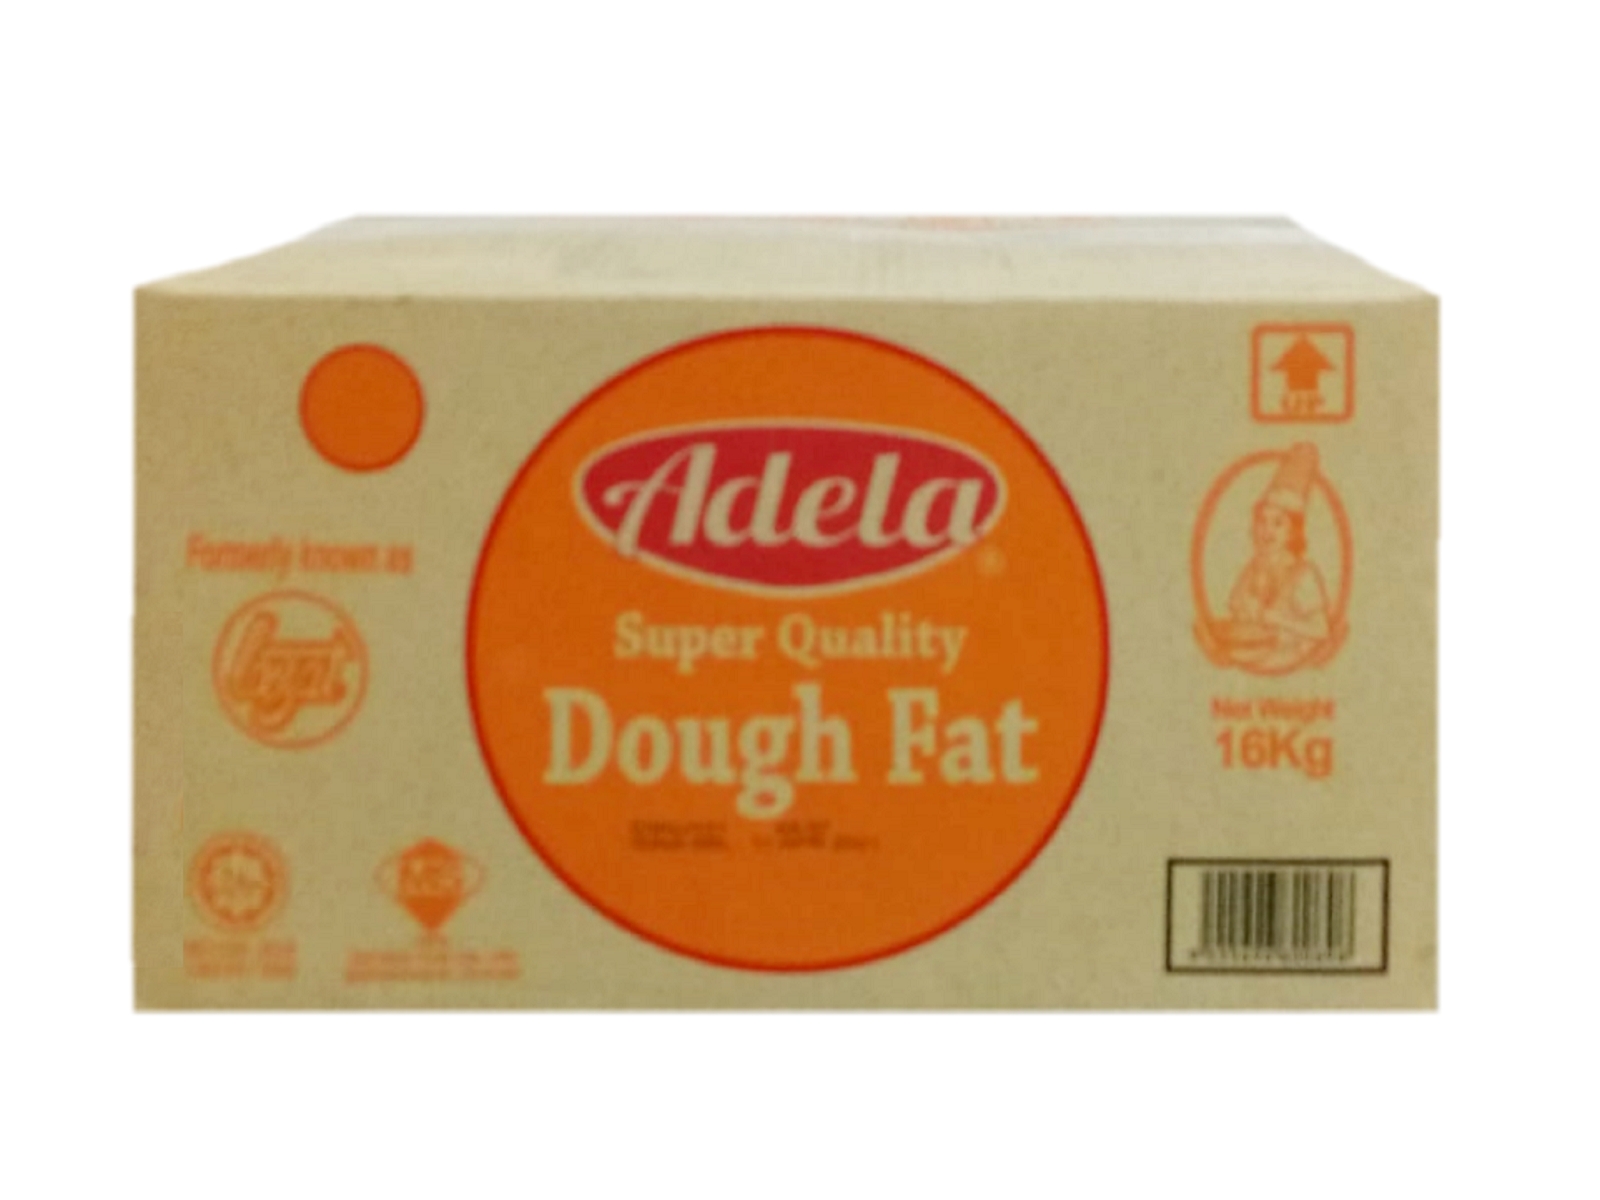 Adela Dough Fat 16kg